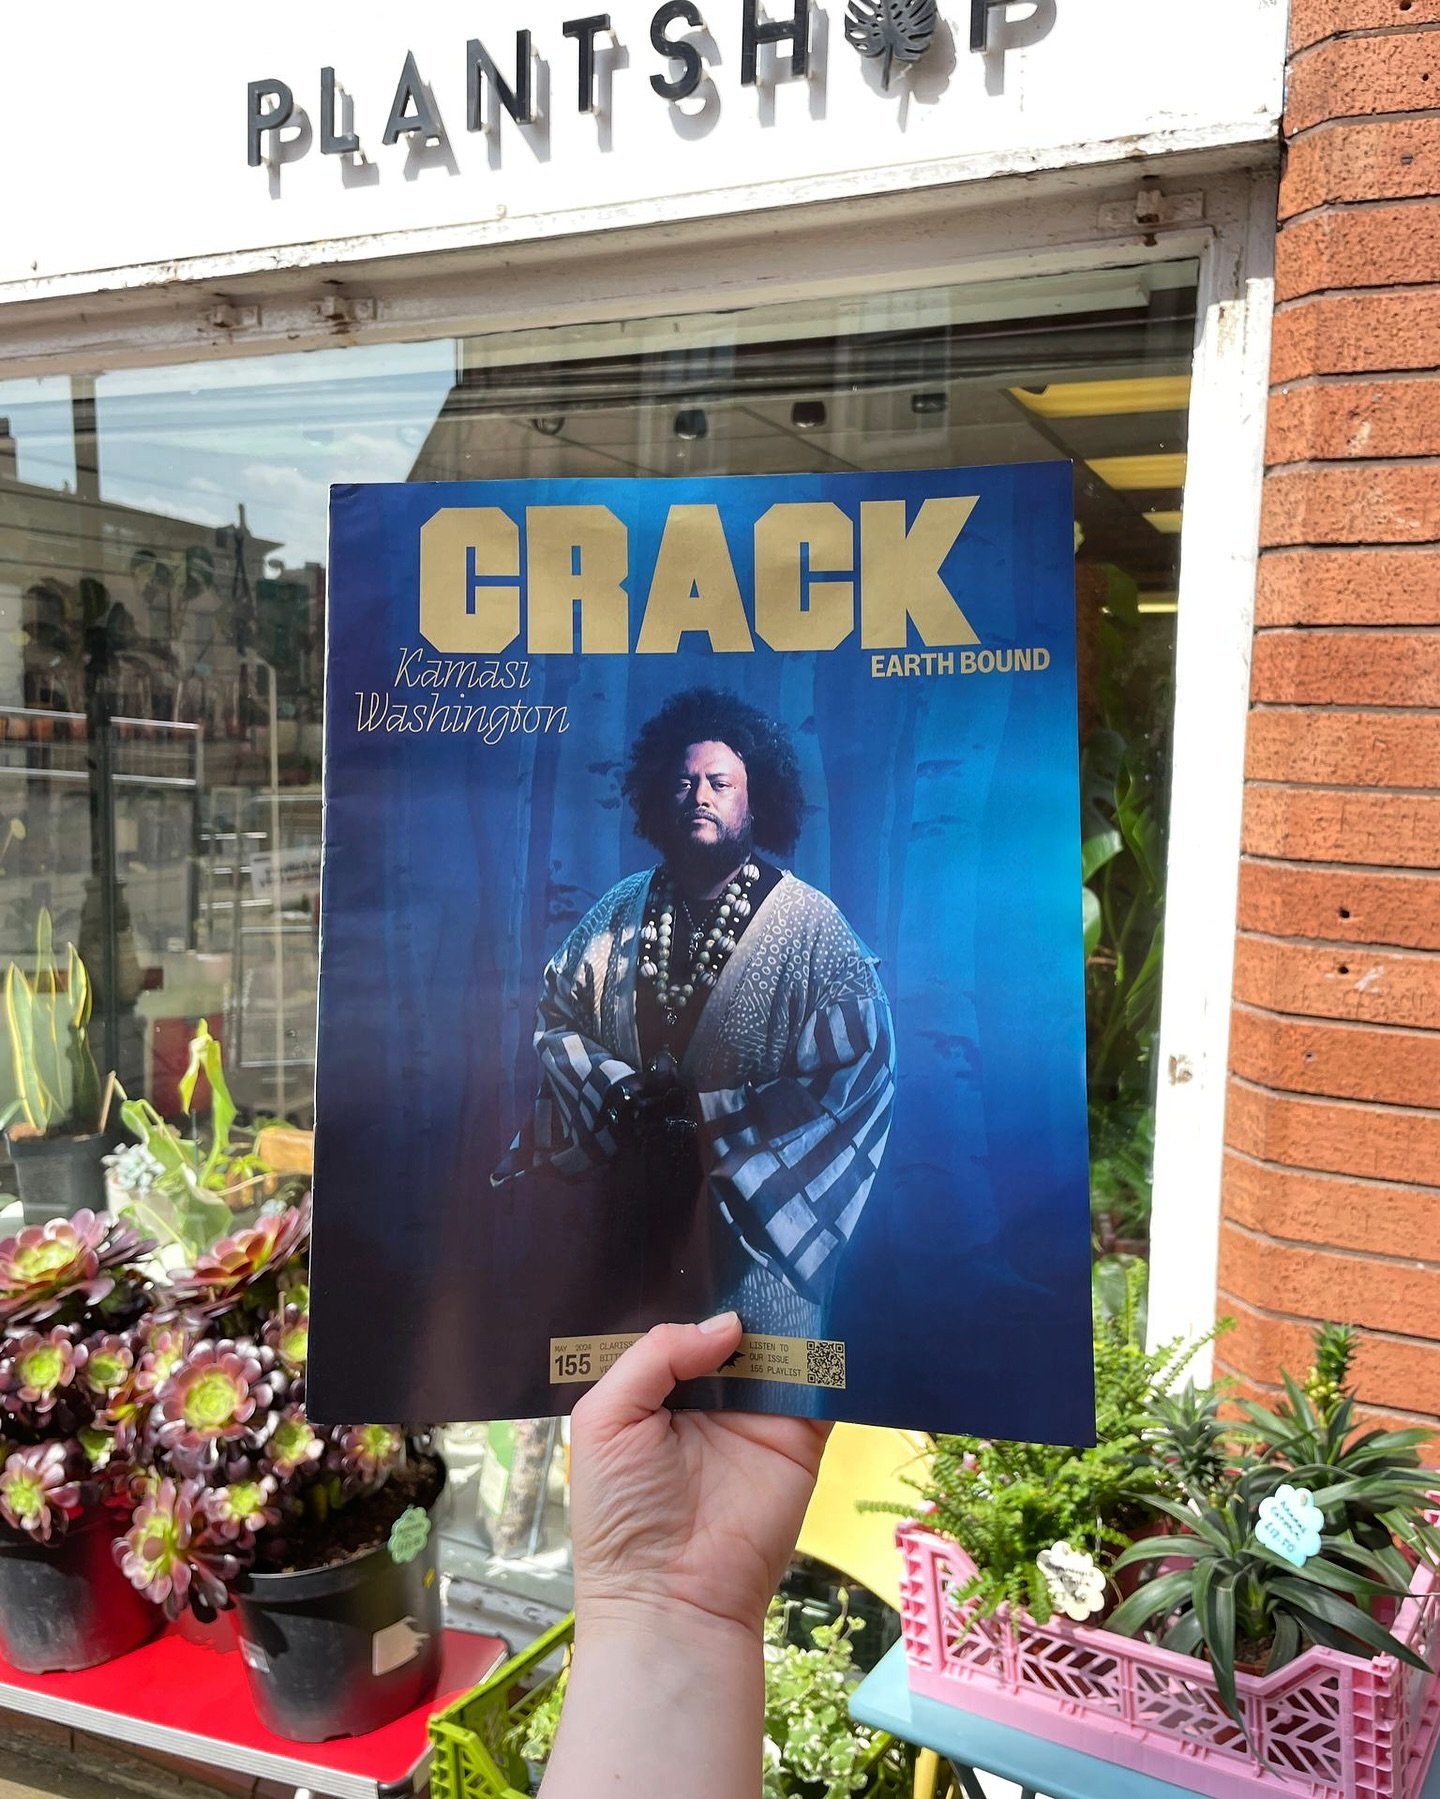 new @crackmagazine just in featuring @kamasiwashington 

pick up your FREE copy